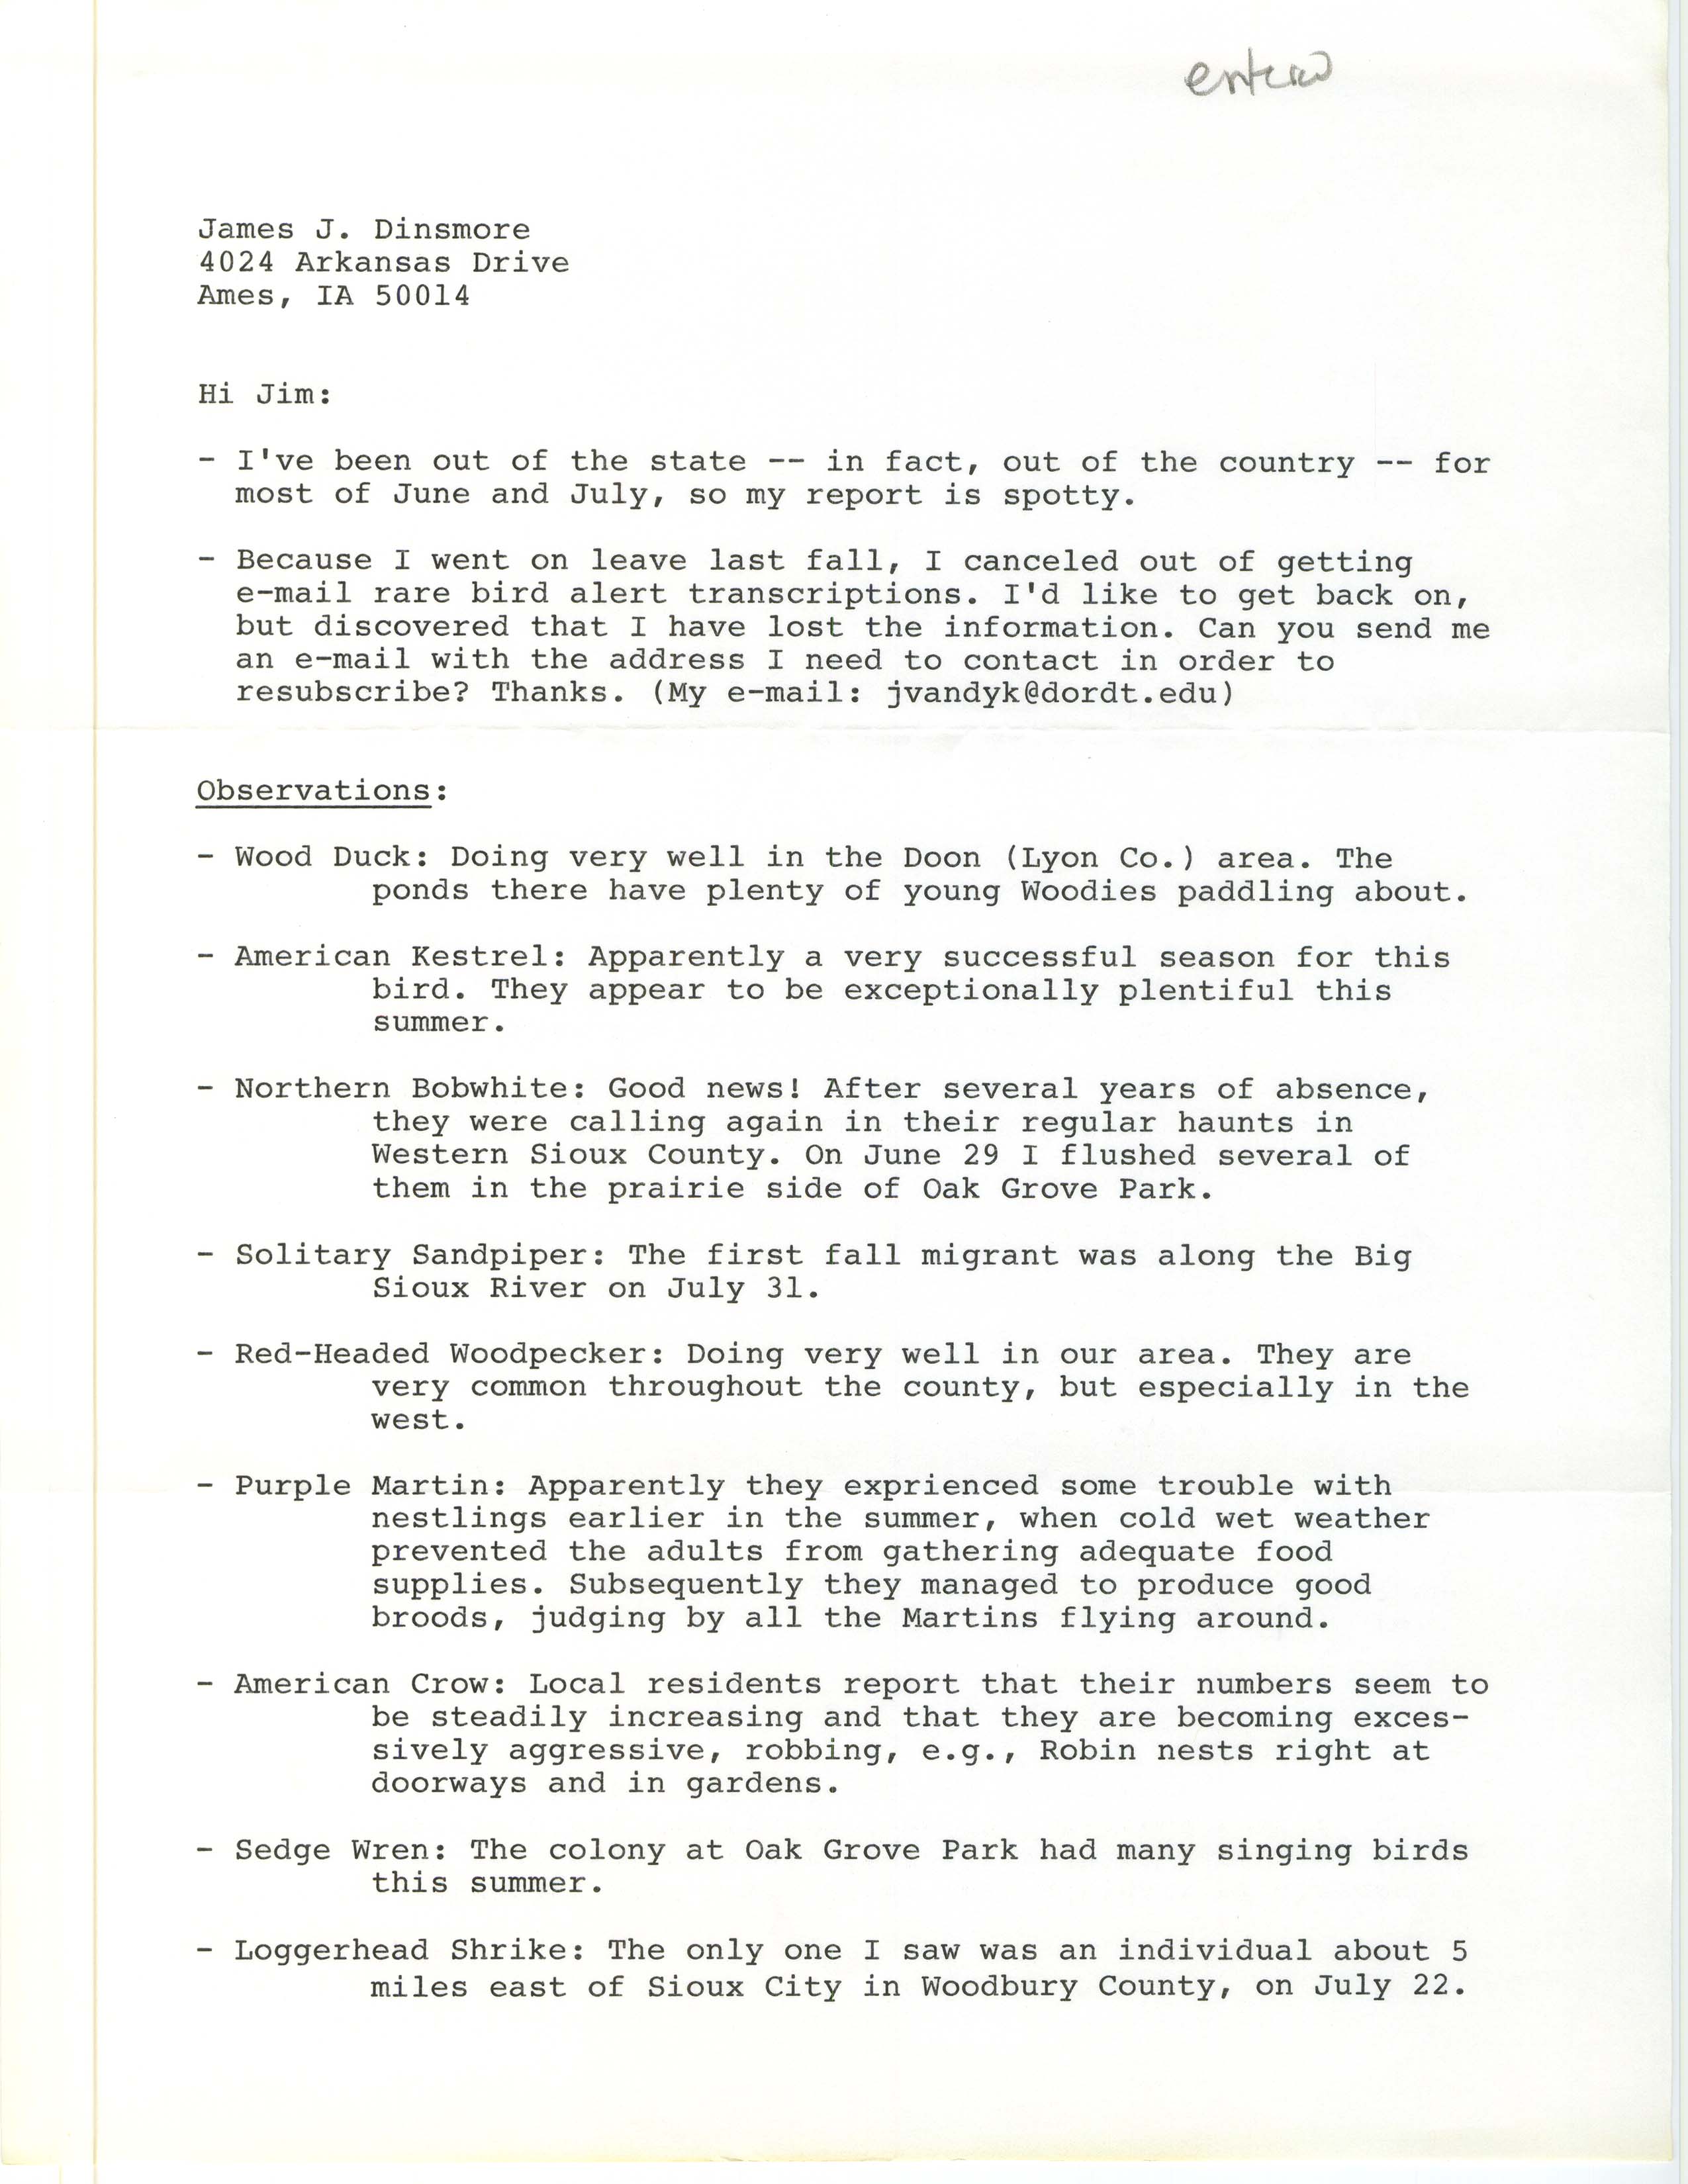 Field notes and John Van Dyk letter to James J. Dinsmore, summer 1996